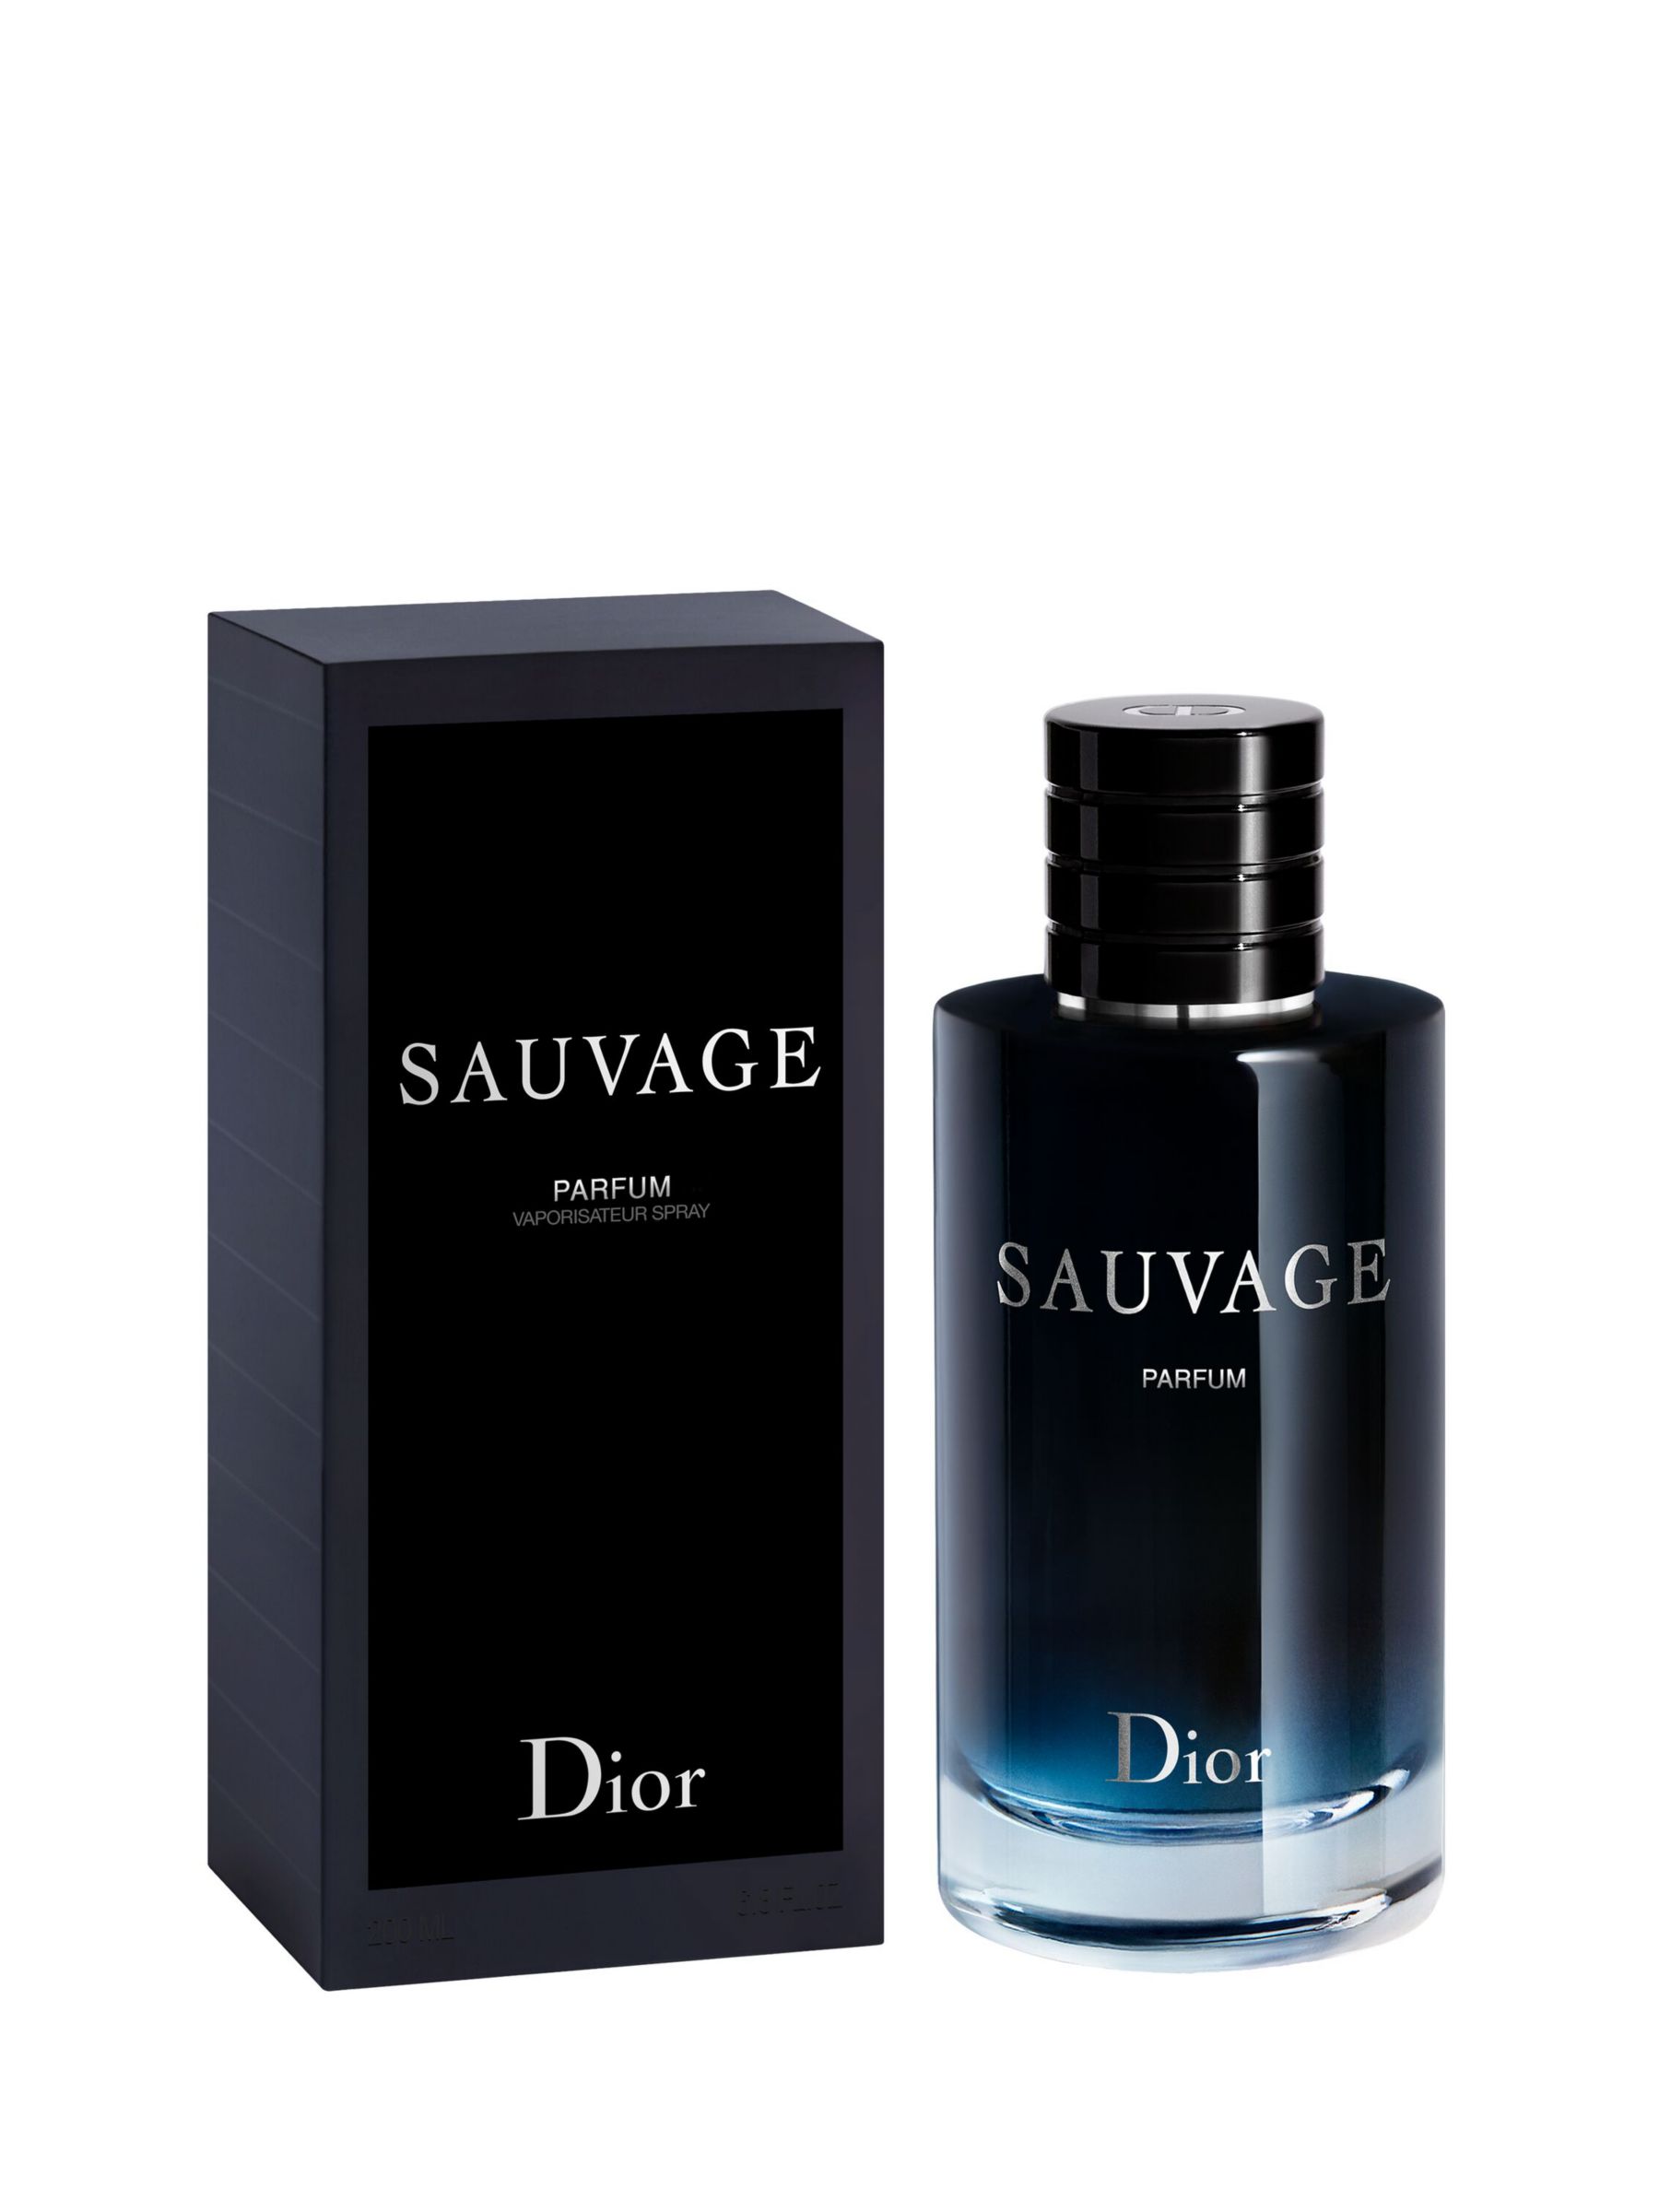 DIOR Sauvage Parfum, 200ml at John Lewis & Partners